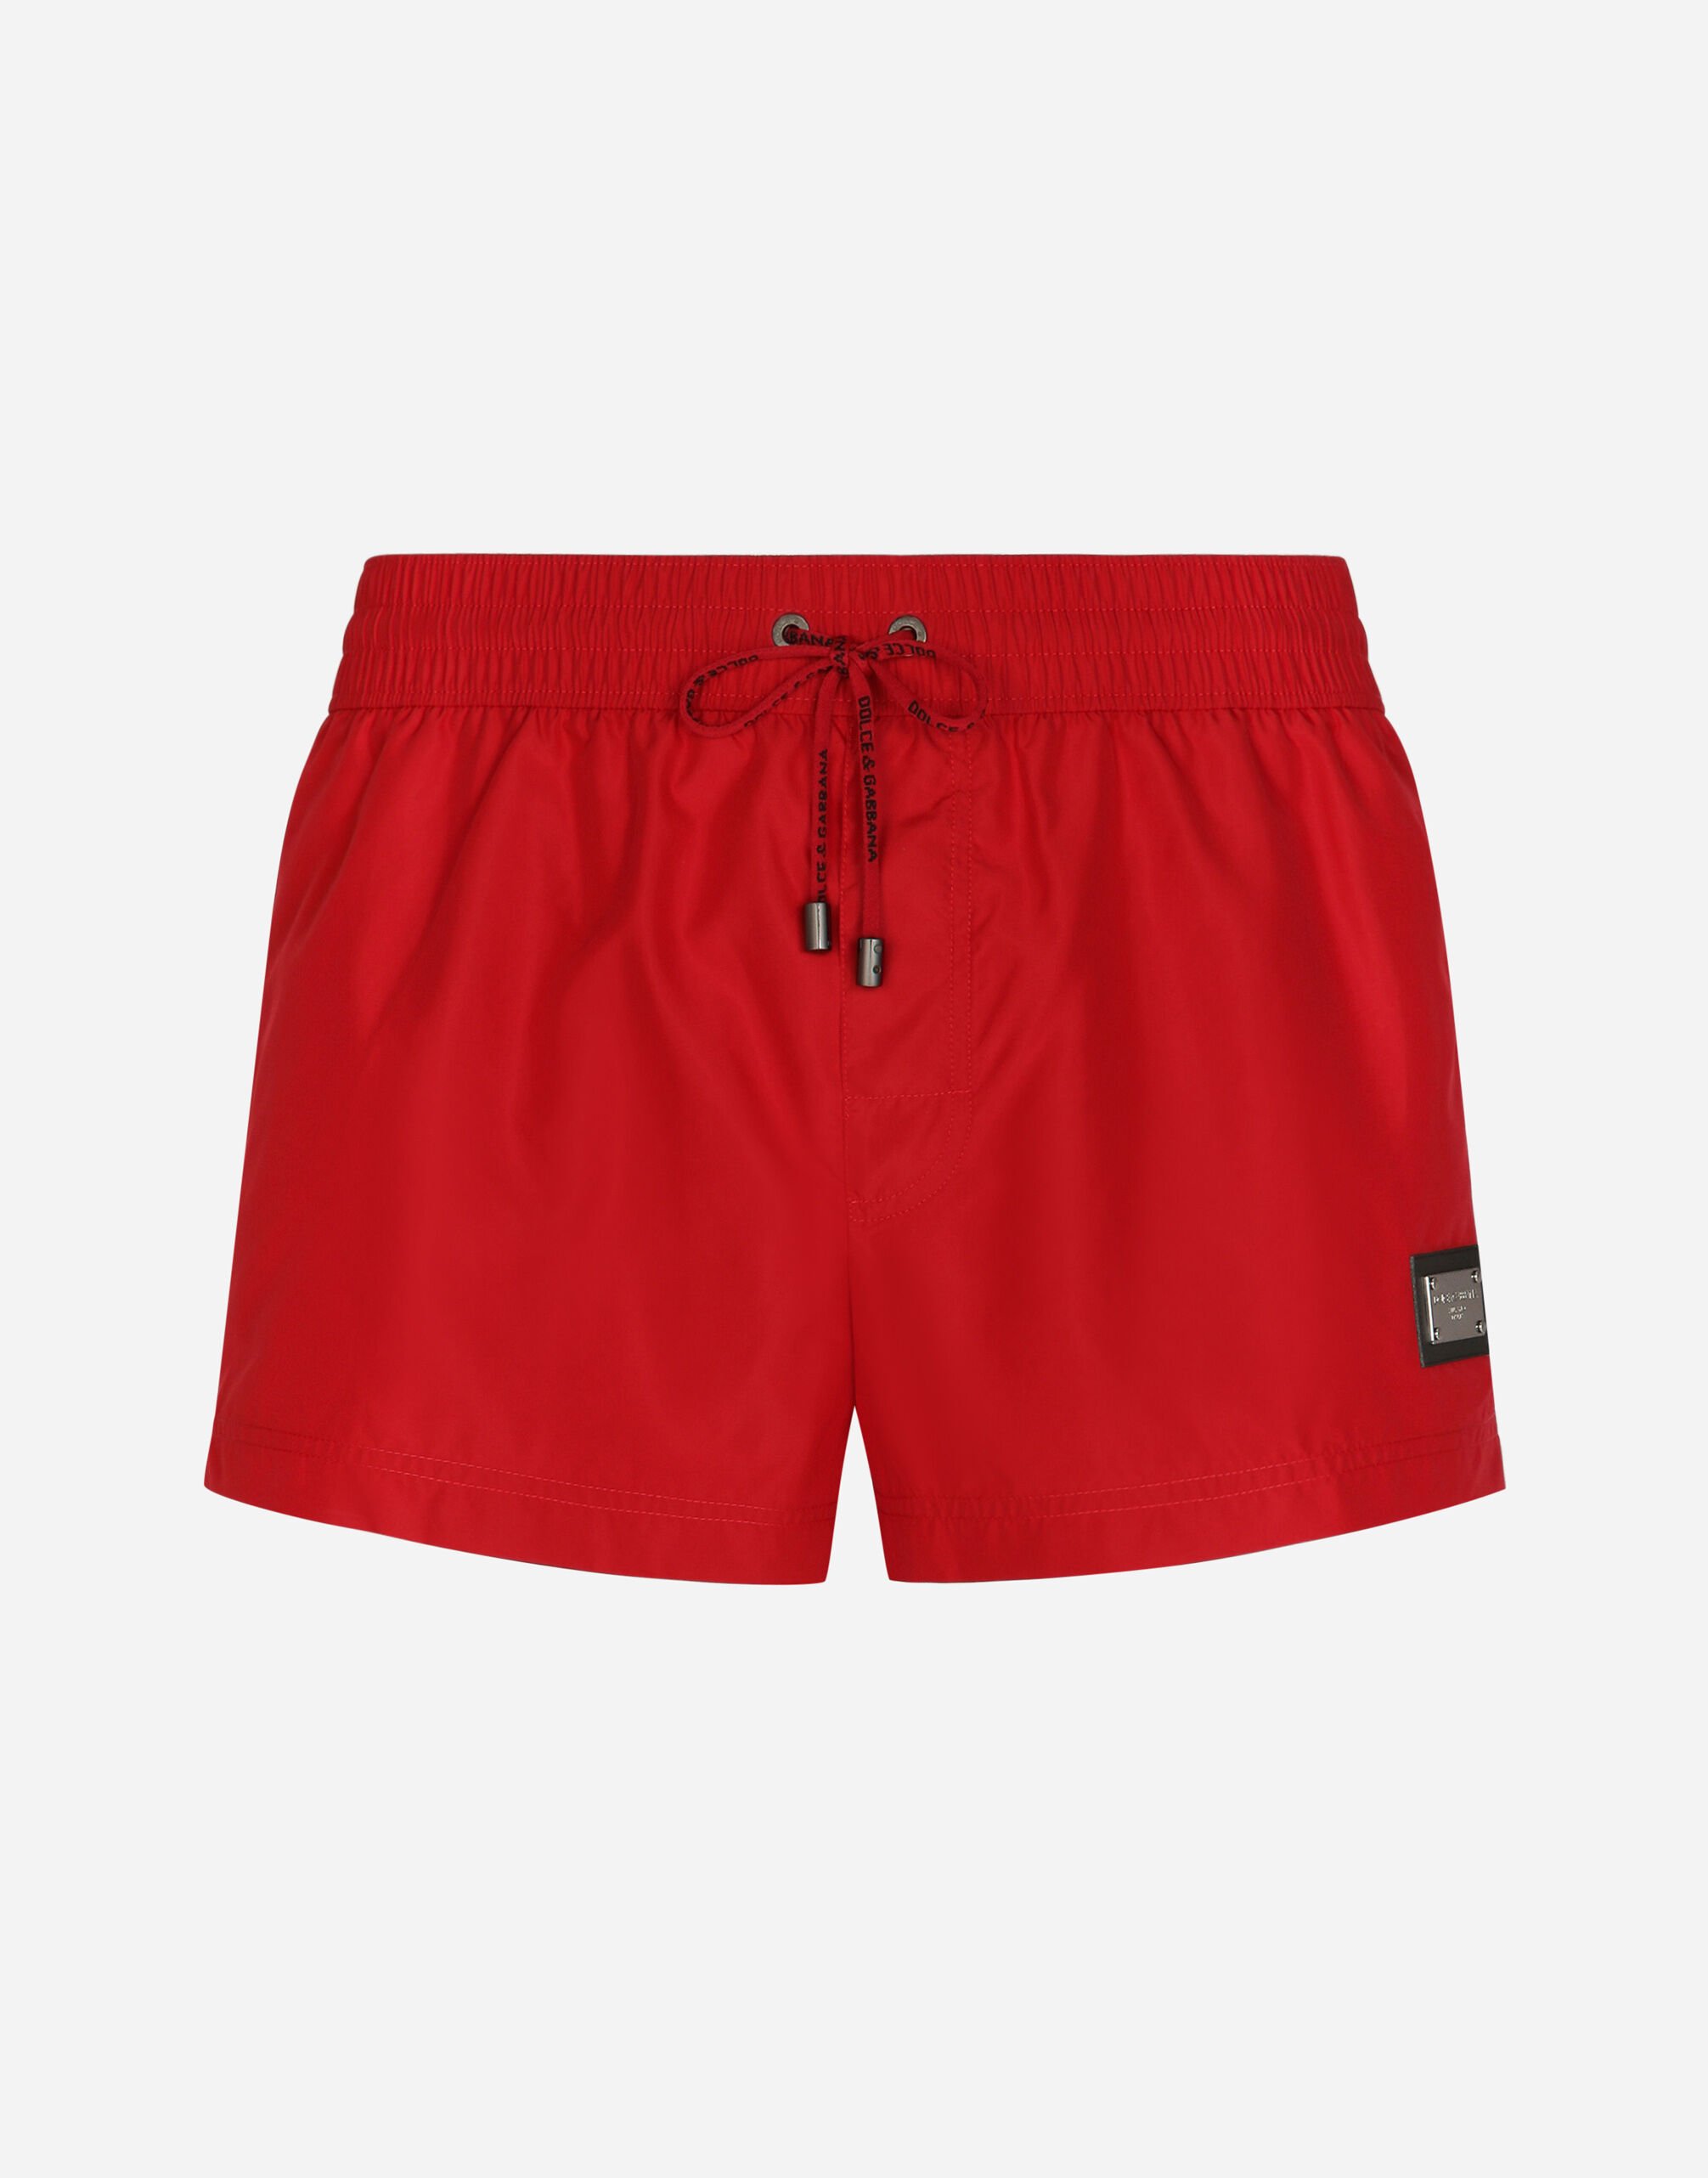 Dolce & Gabbana Short swim trunks with branded tag Print M4E68TISMF5